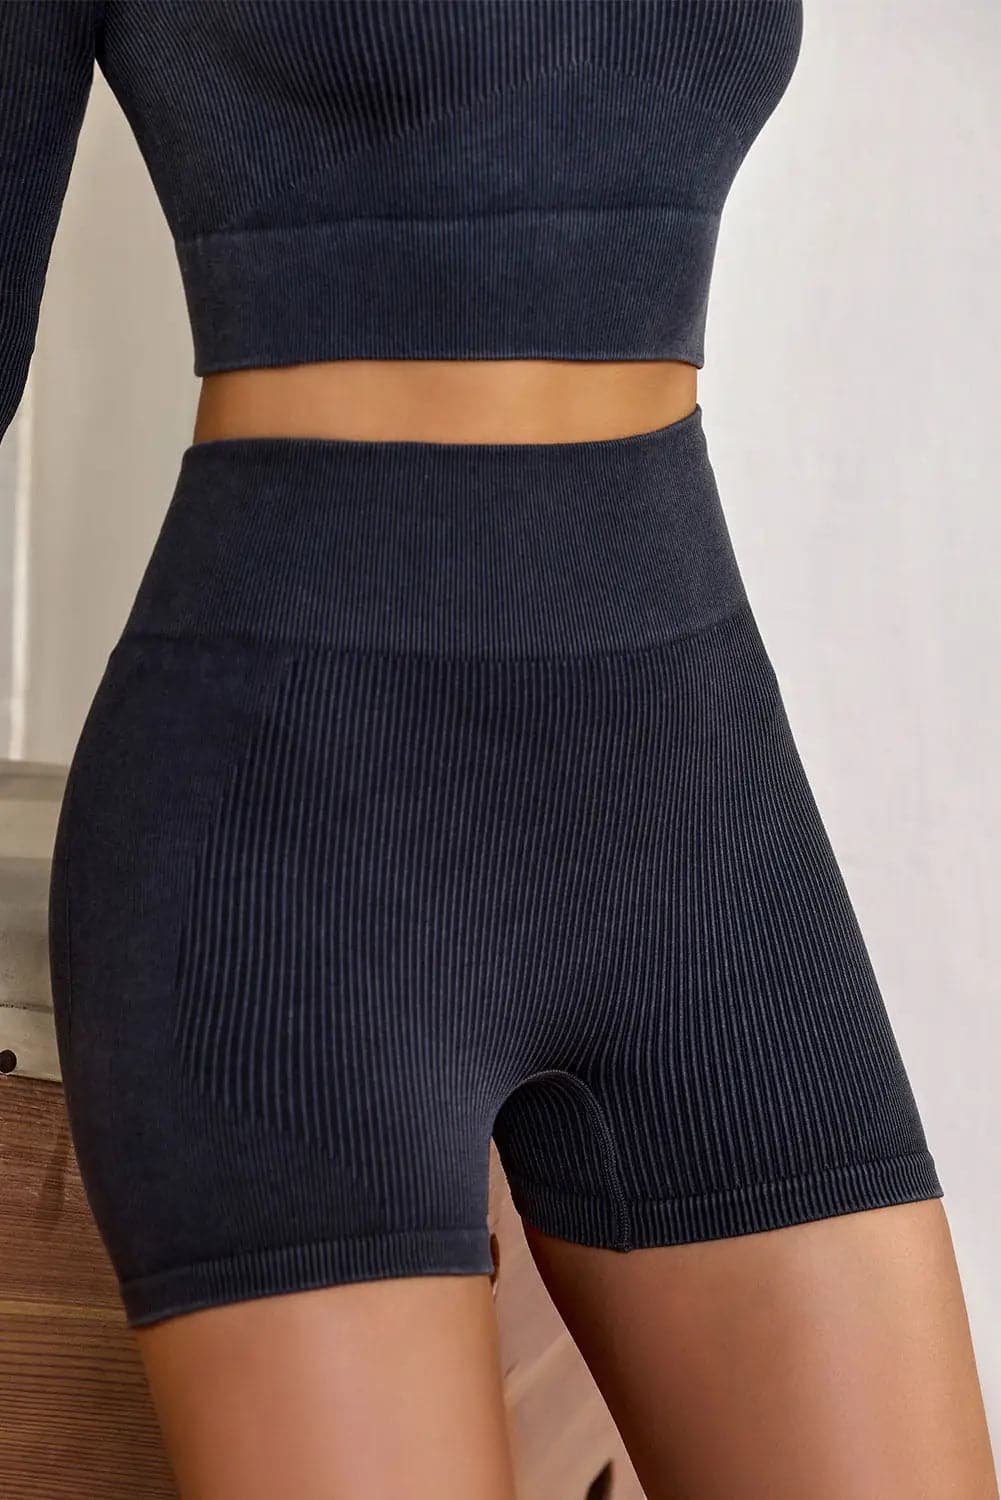 Black Seamless Ribbed Knit Butt Lifter Yoga Shorts - Activewear